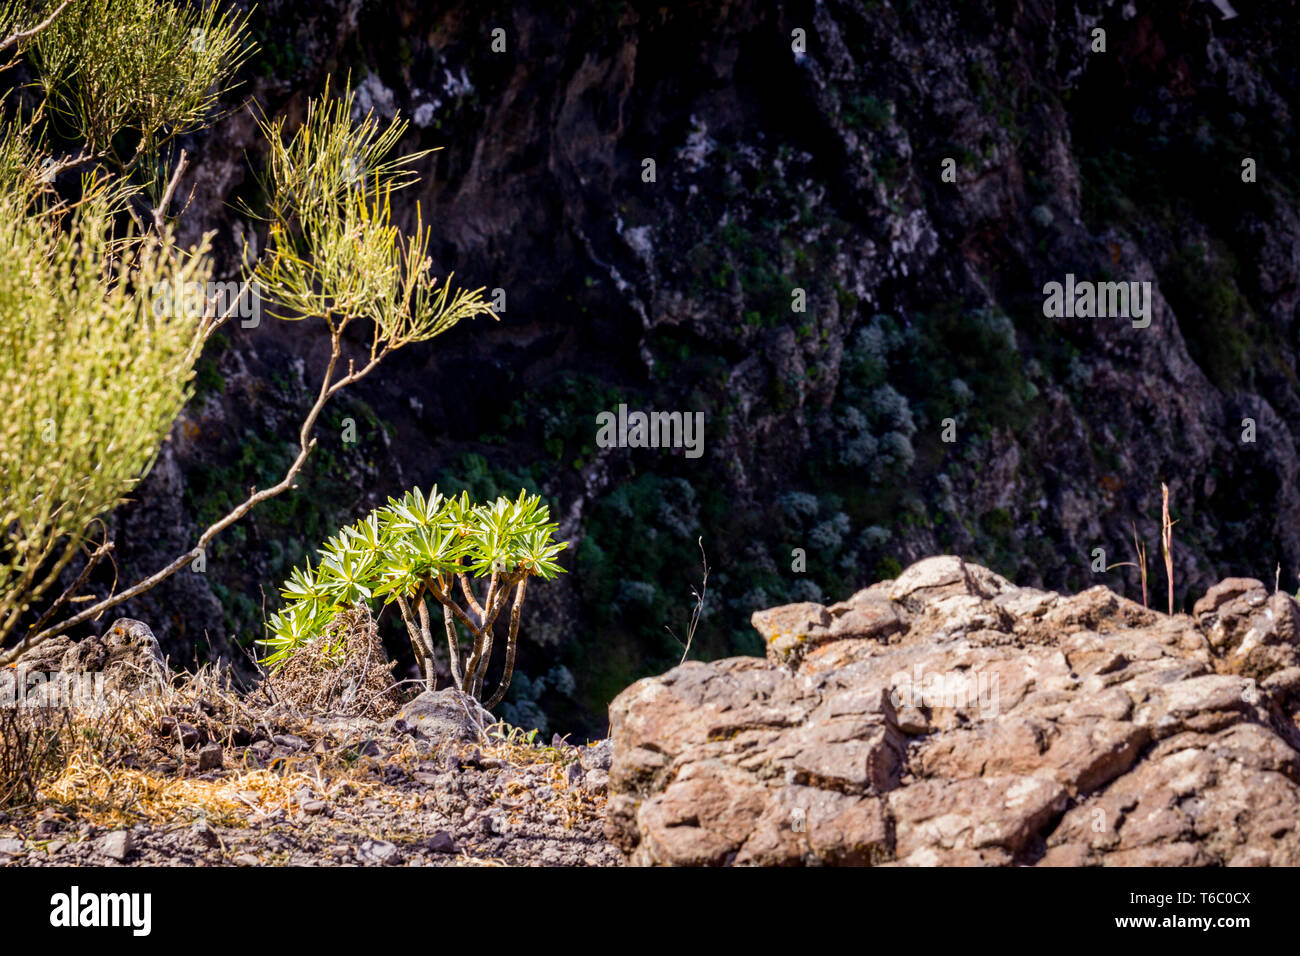 Landscape with aeonium (succulent) and rock. Spain, Tenerife, La Masca. Stock Photo